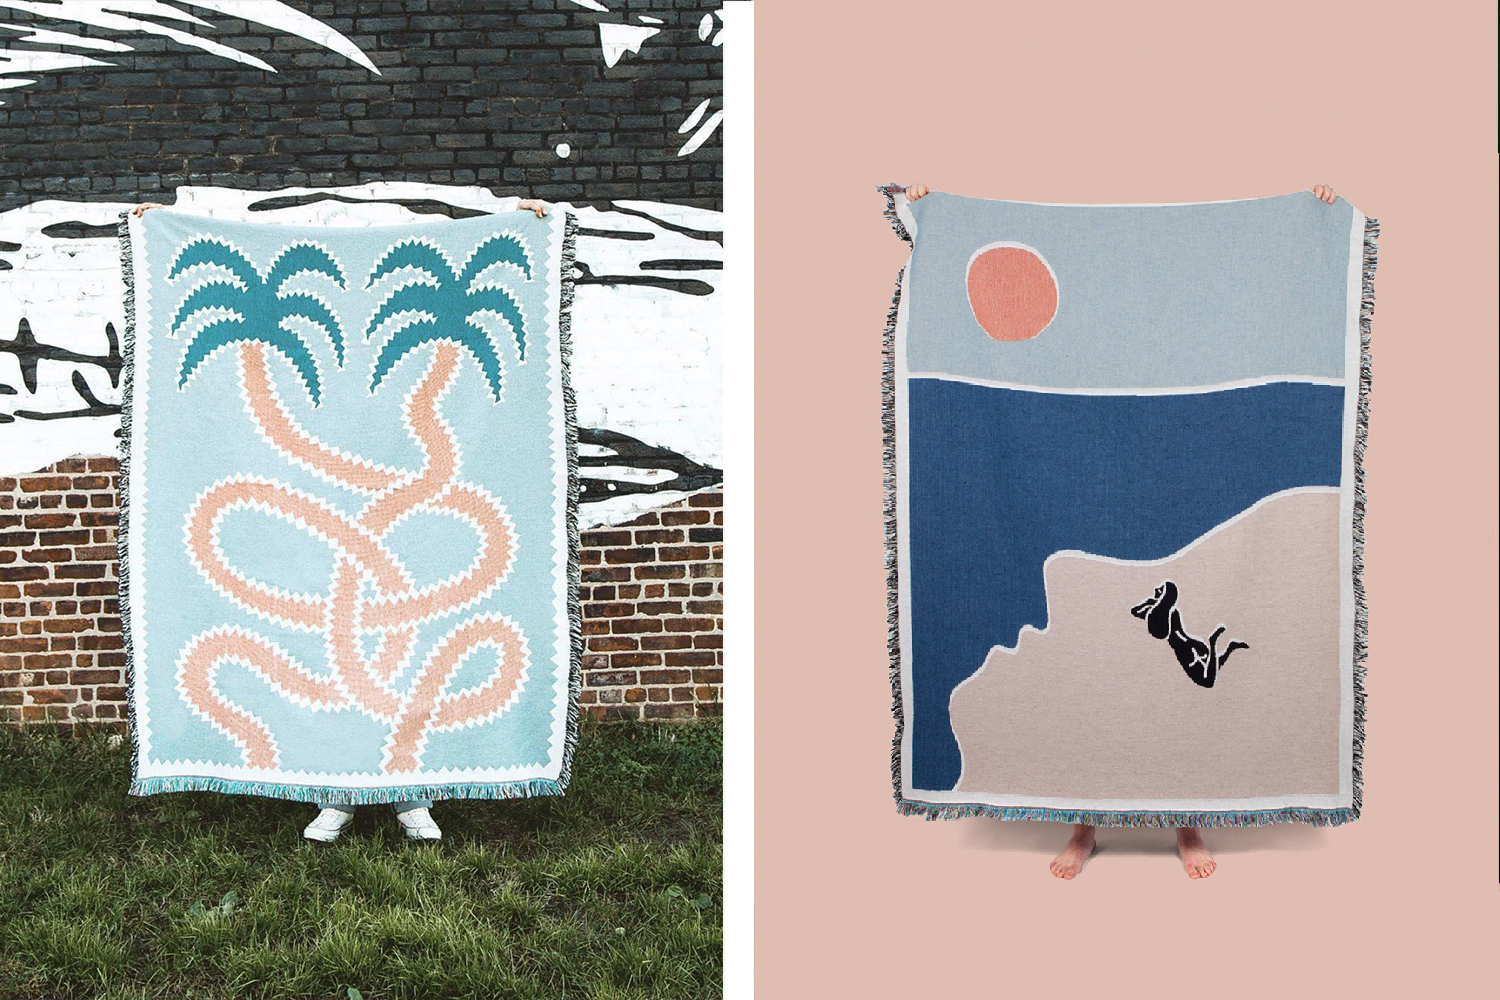  Some artist-designed woven blankets by  Slowdown  . 